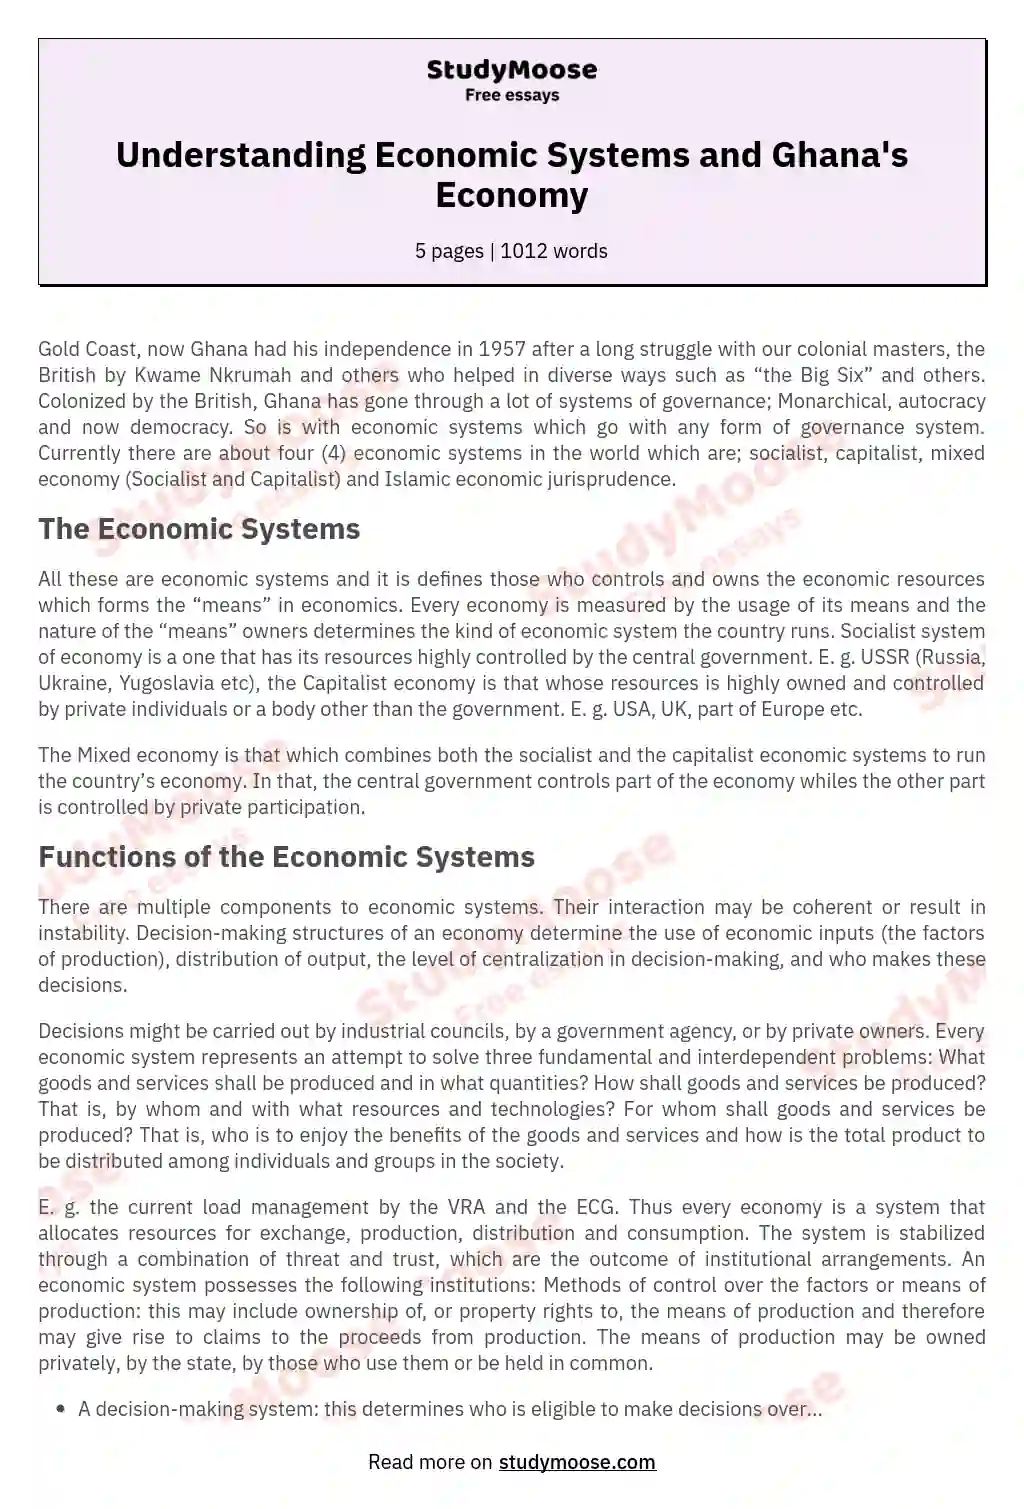 Understanding Economic Systems and Ghana's Economy essay